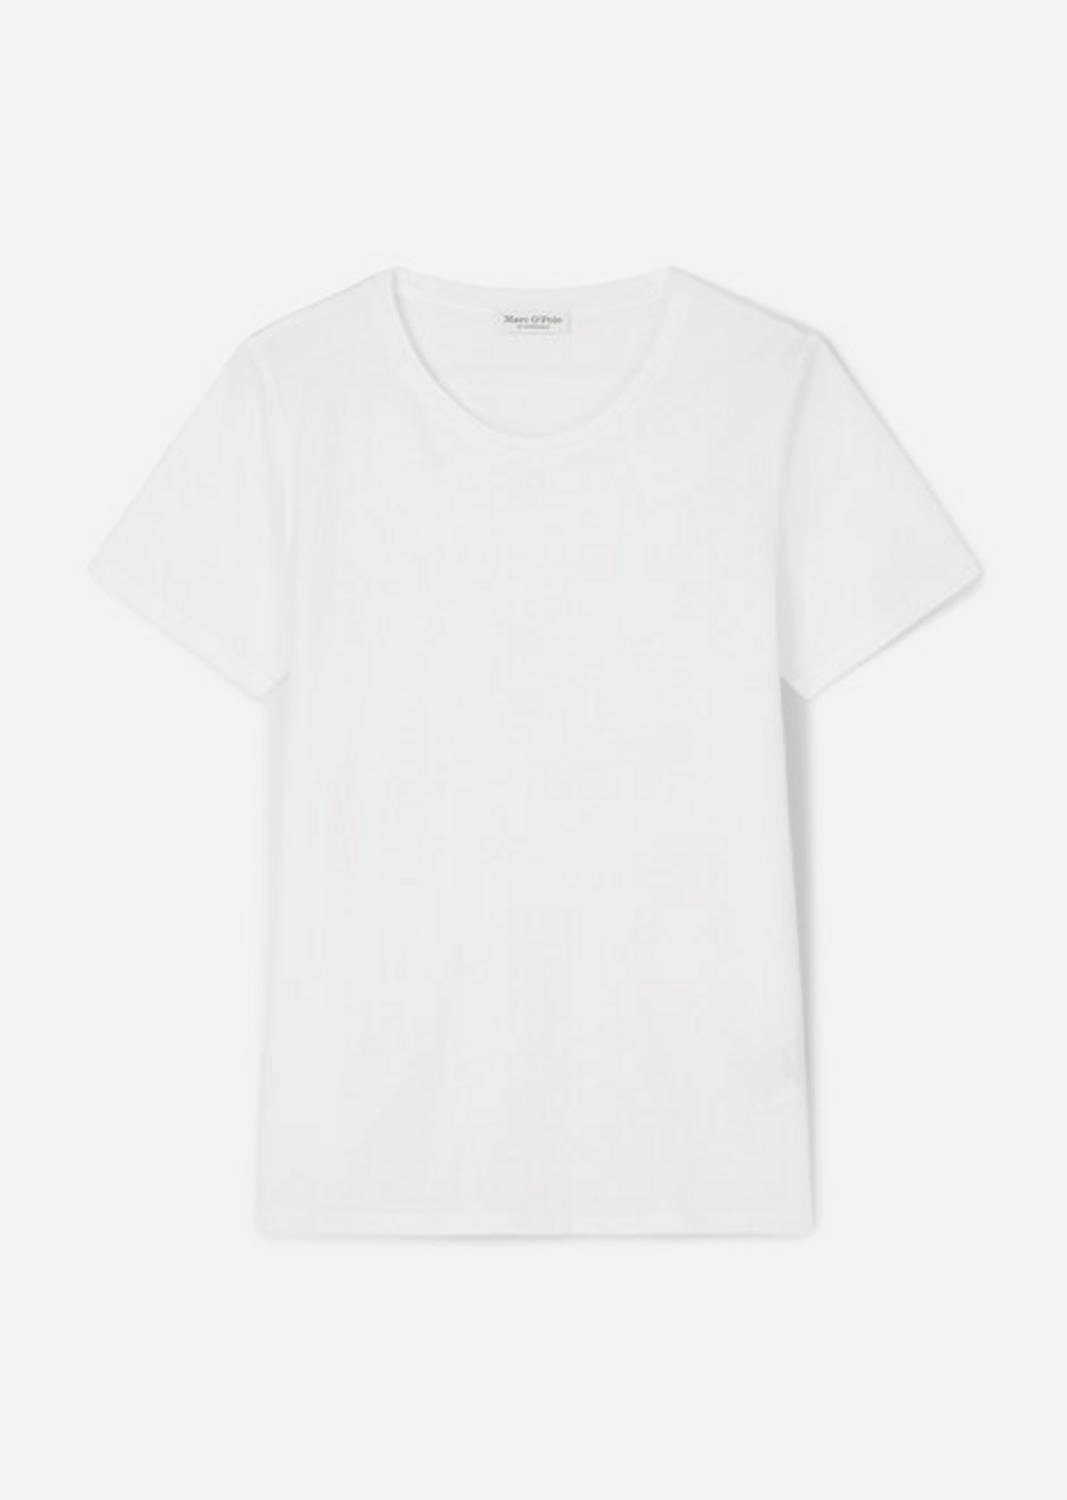 Marc O'Polo T-Shirt T-shirt, short sleeve, round neck